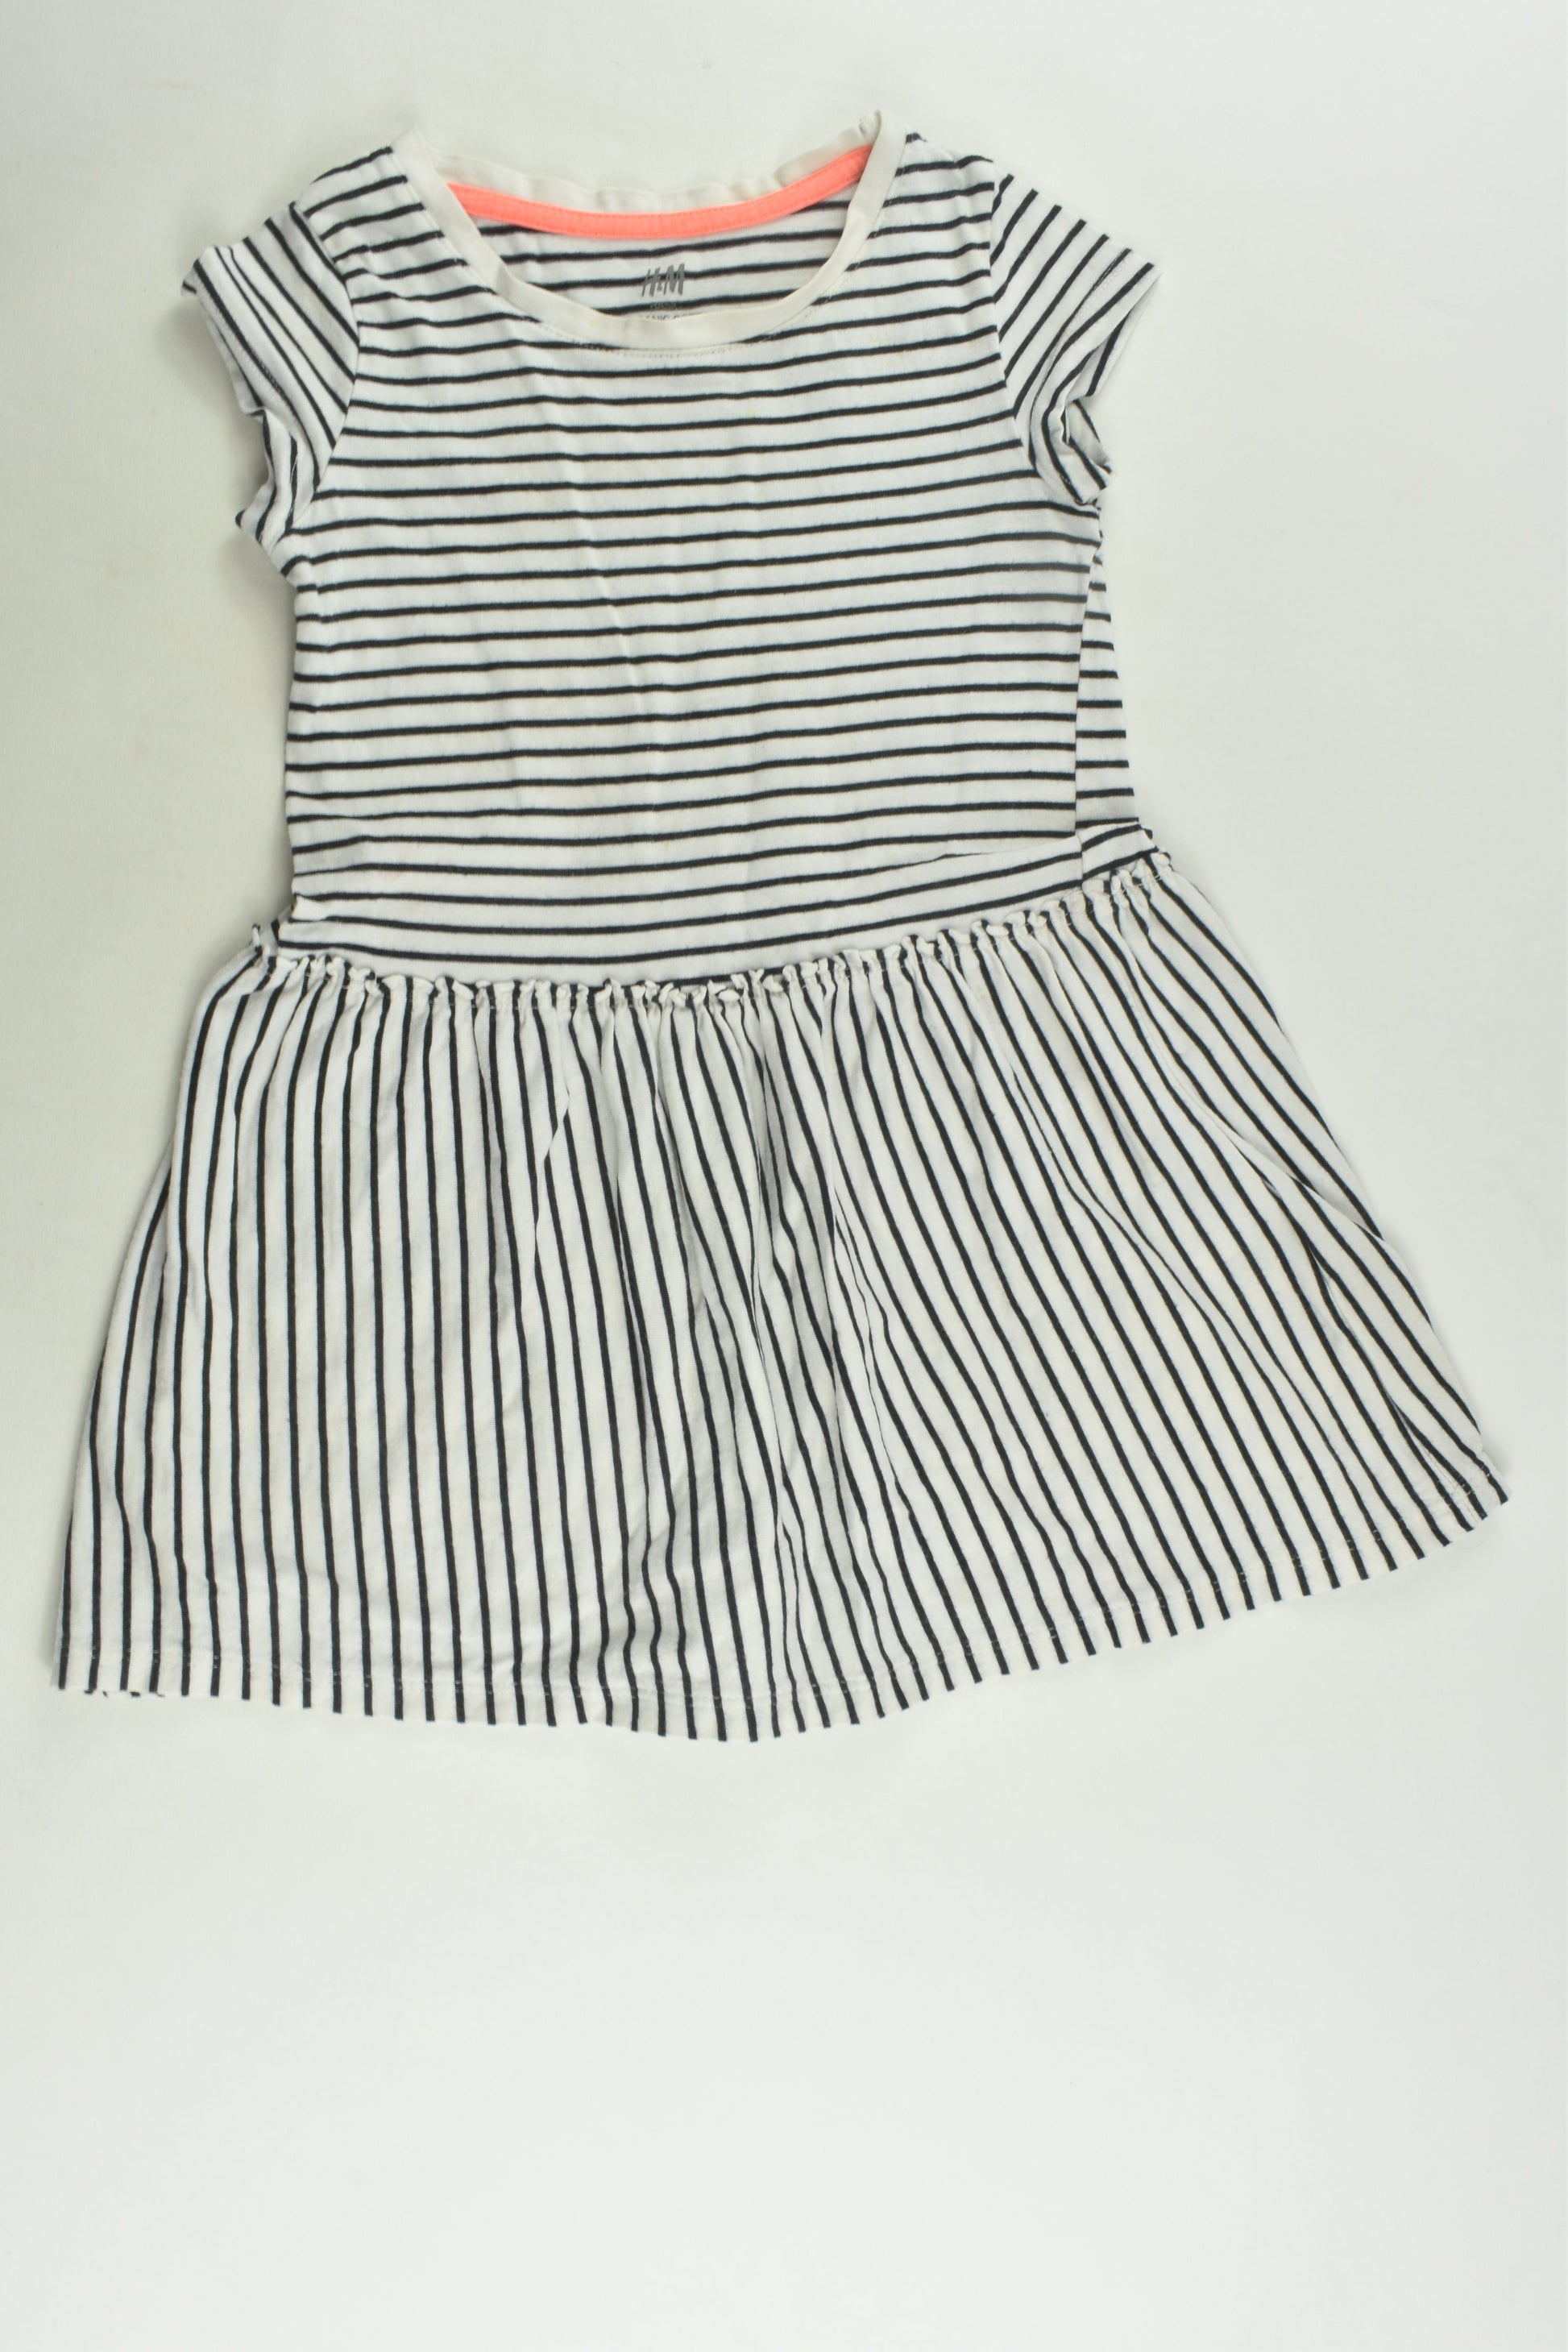 H&M Size 3-4 Organic Dress